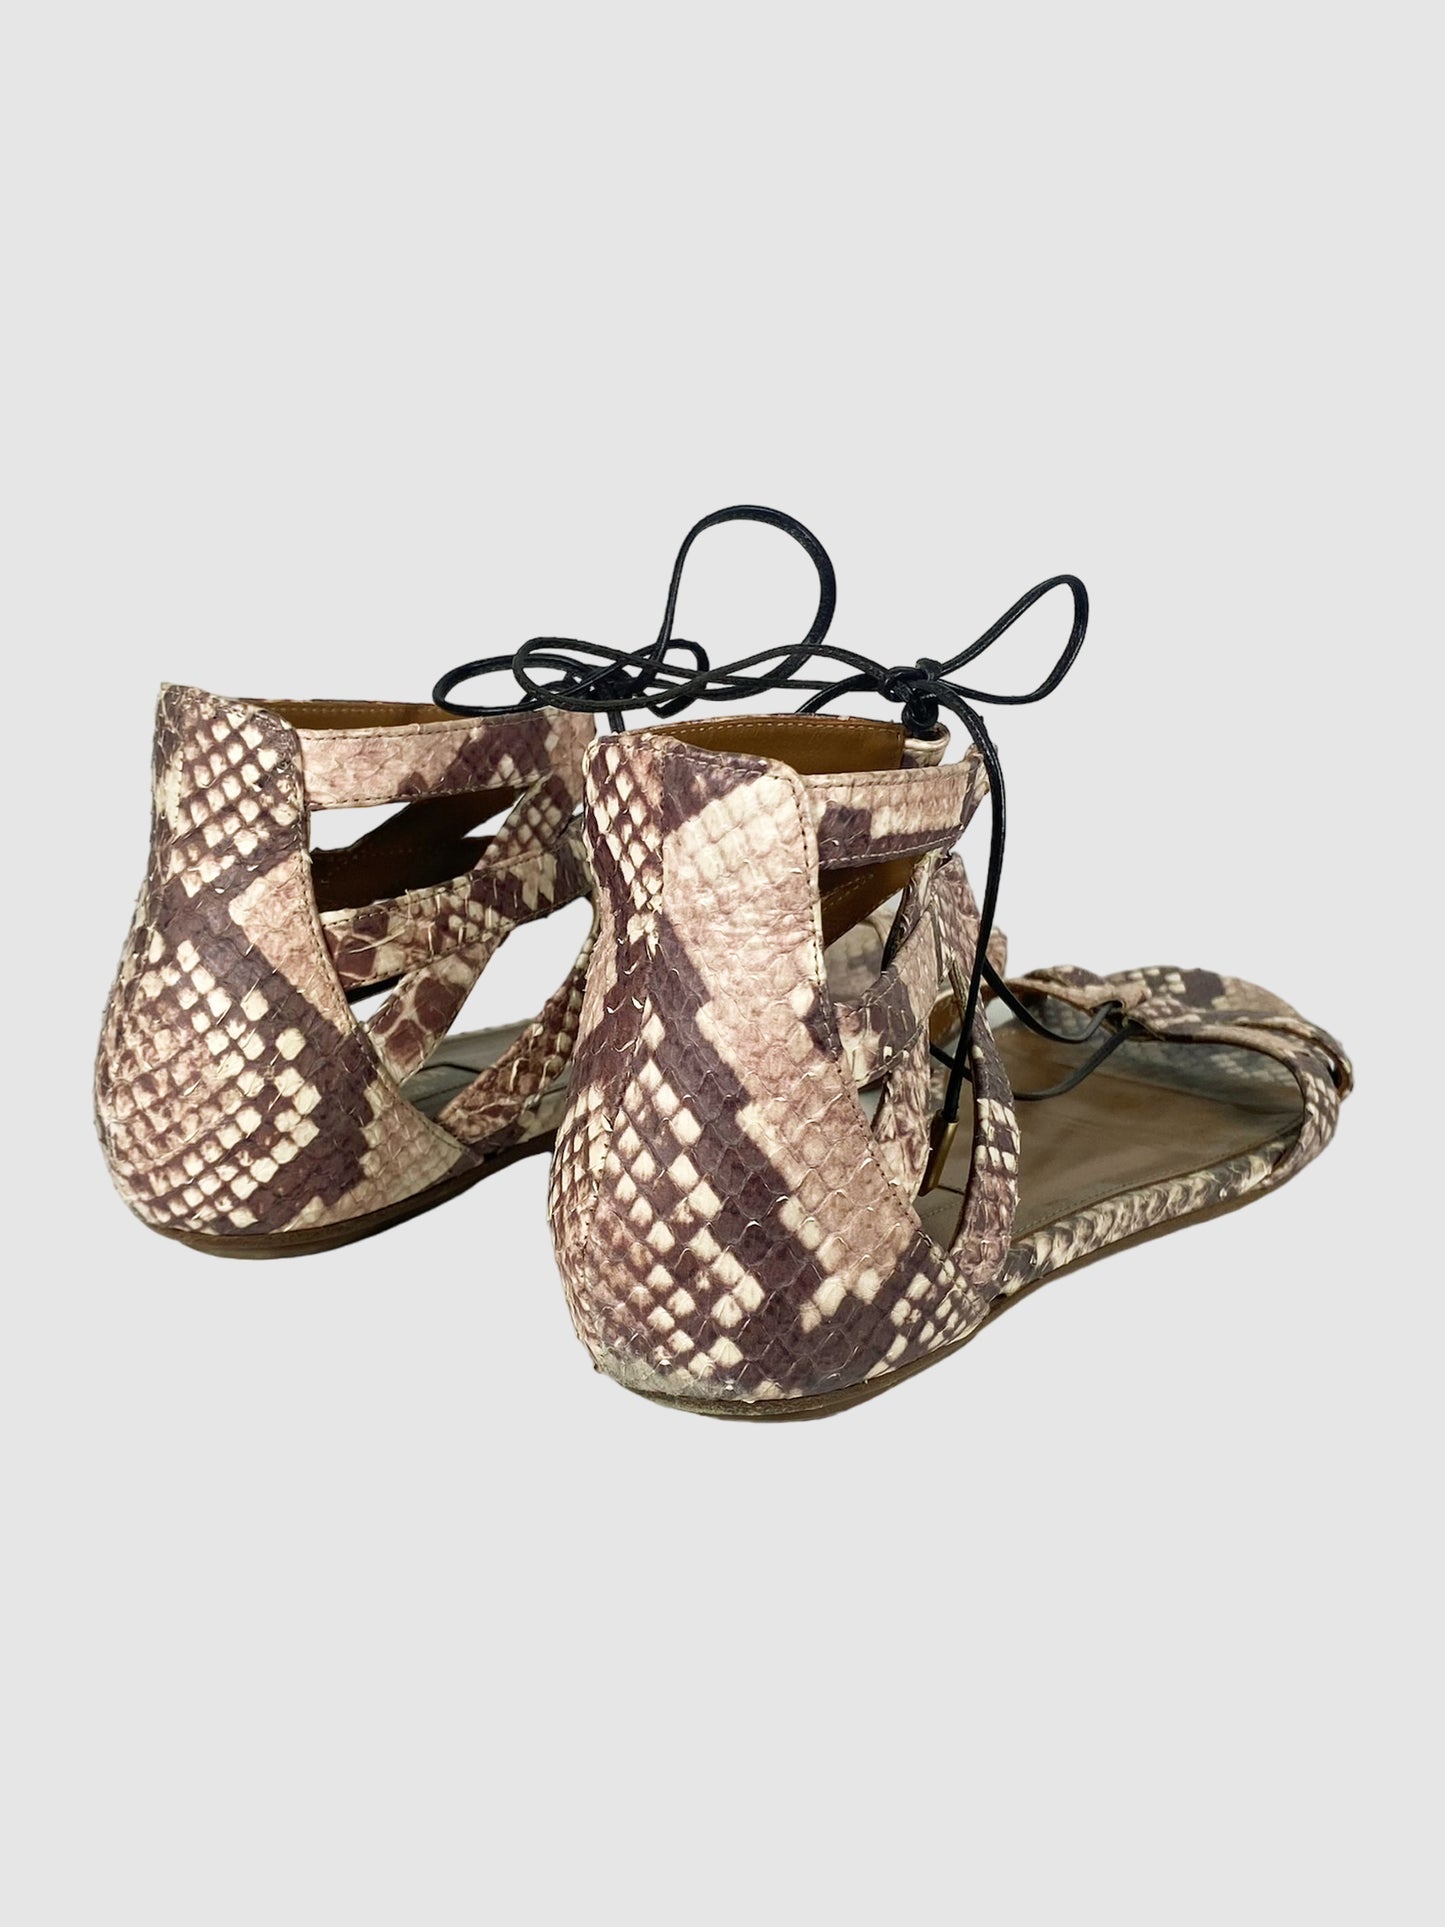 Reptile Print Sandals - Size 38.5